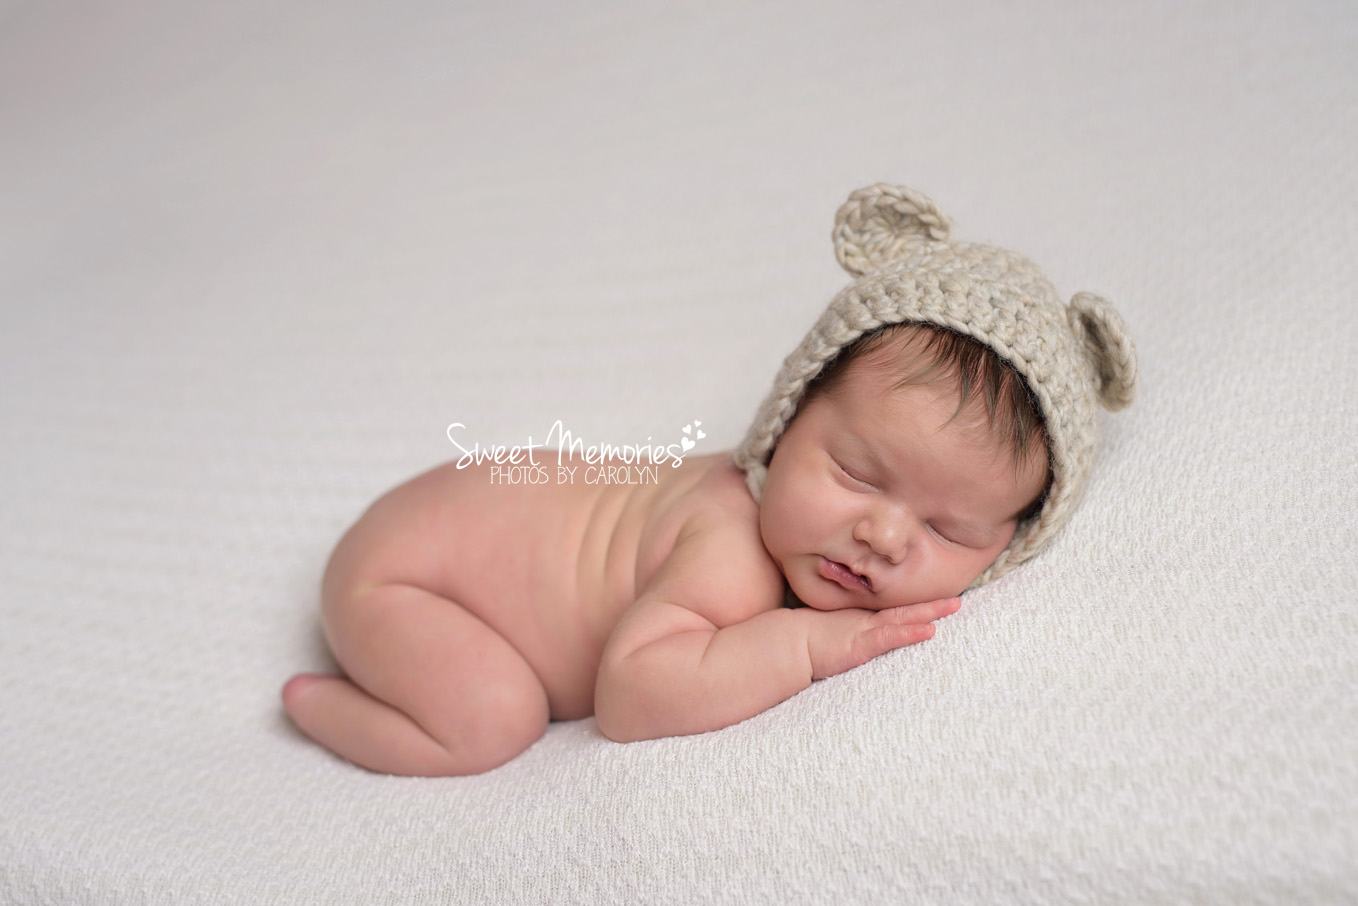 Newborn in teddy bear hat